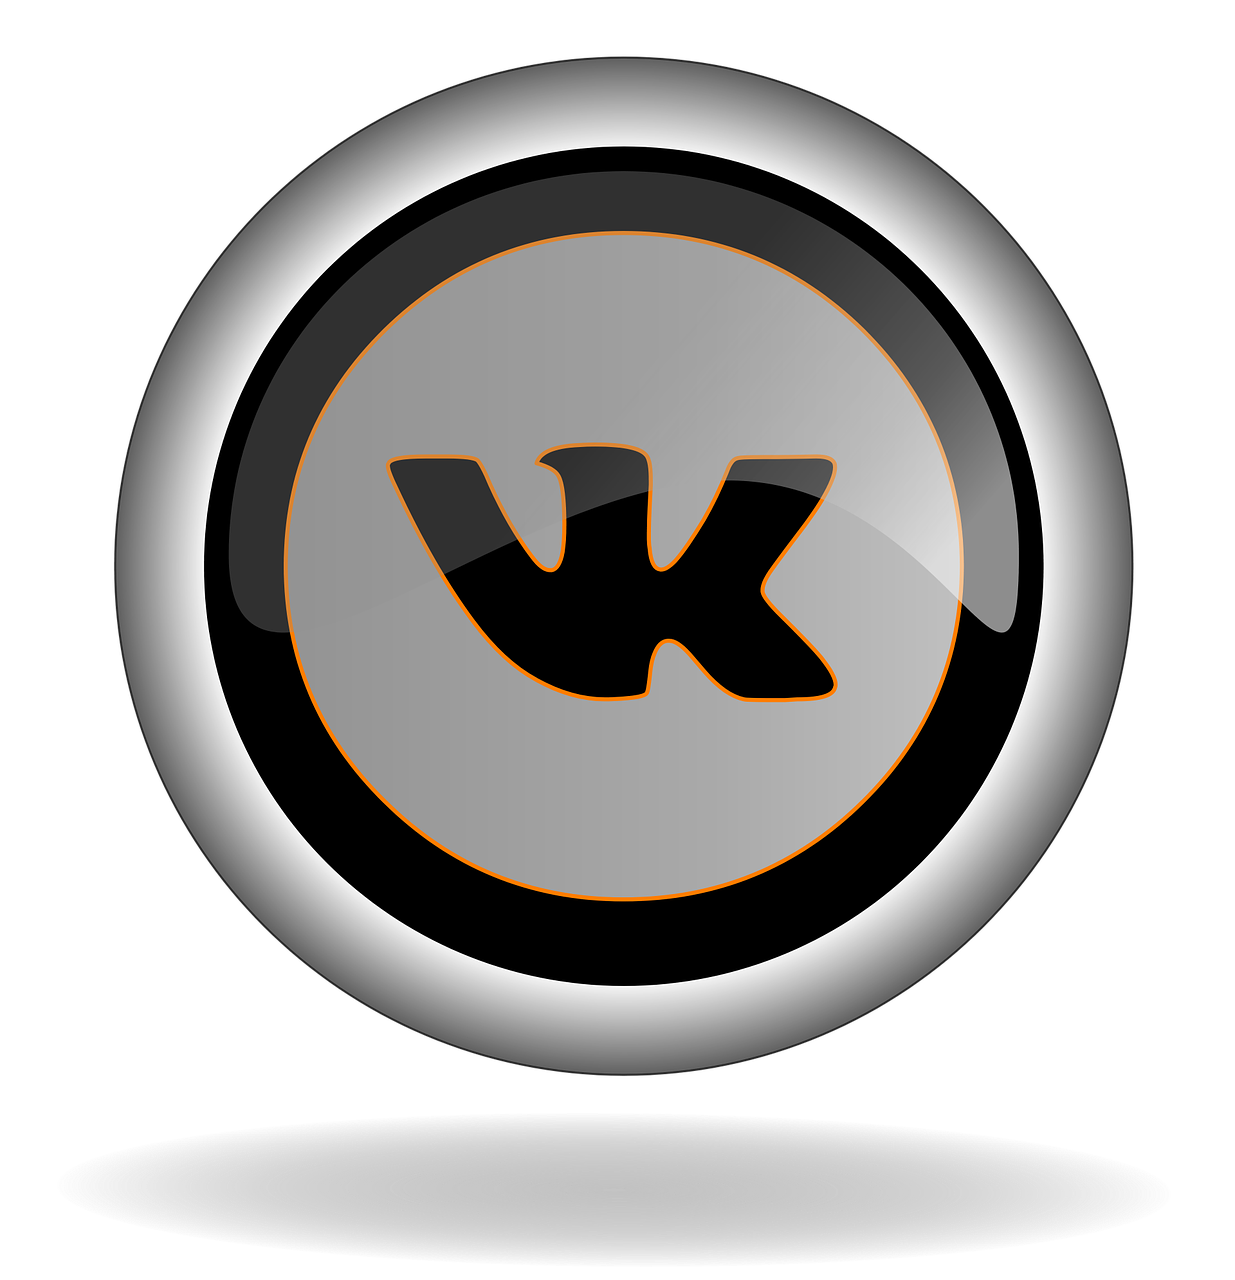 Vkontakte Logo Download Free PNG